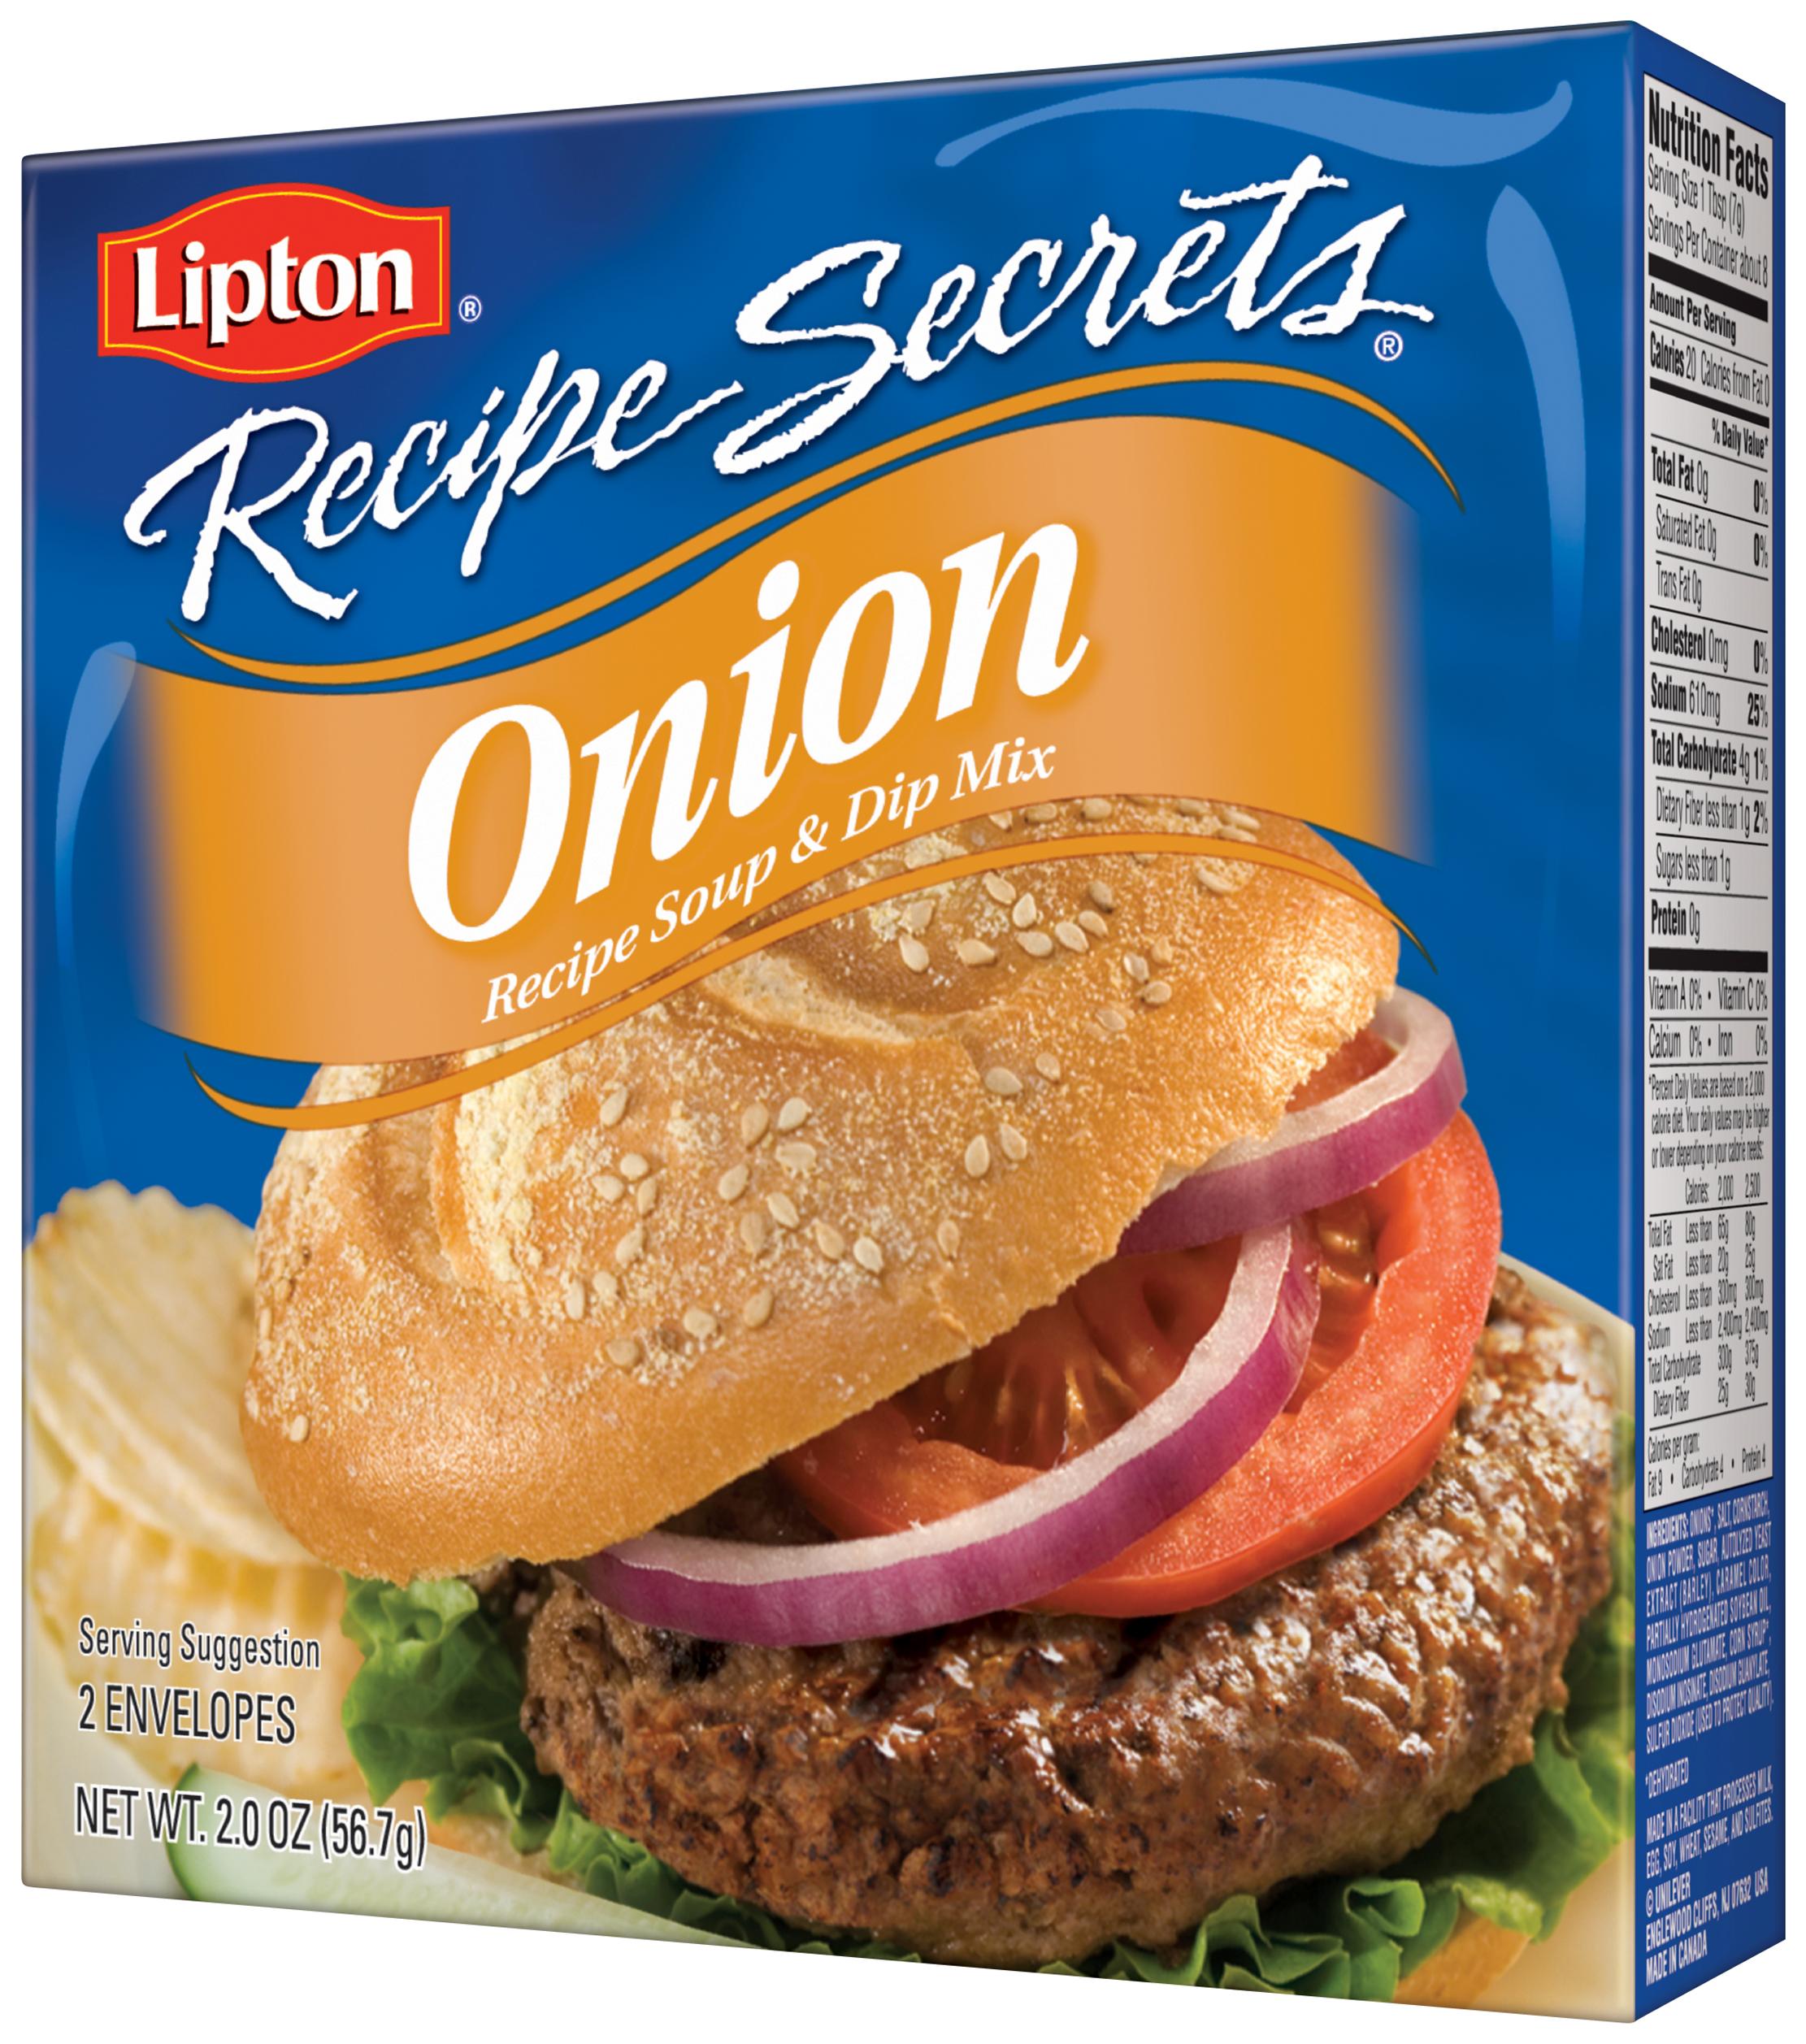 Lipton Onion Soup Mix Recipes / 10 Best Lipton Onion Soup Mix Onion Dip ...